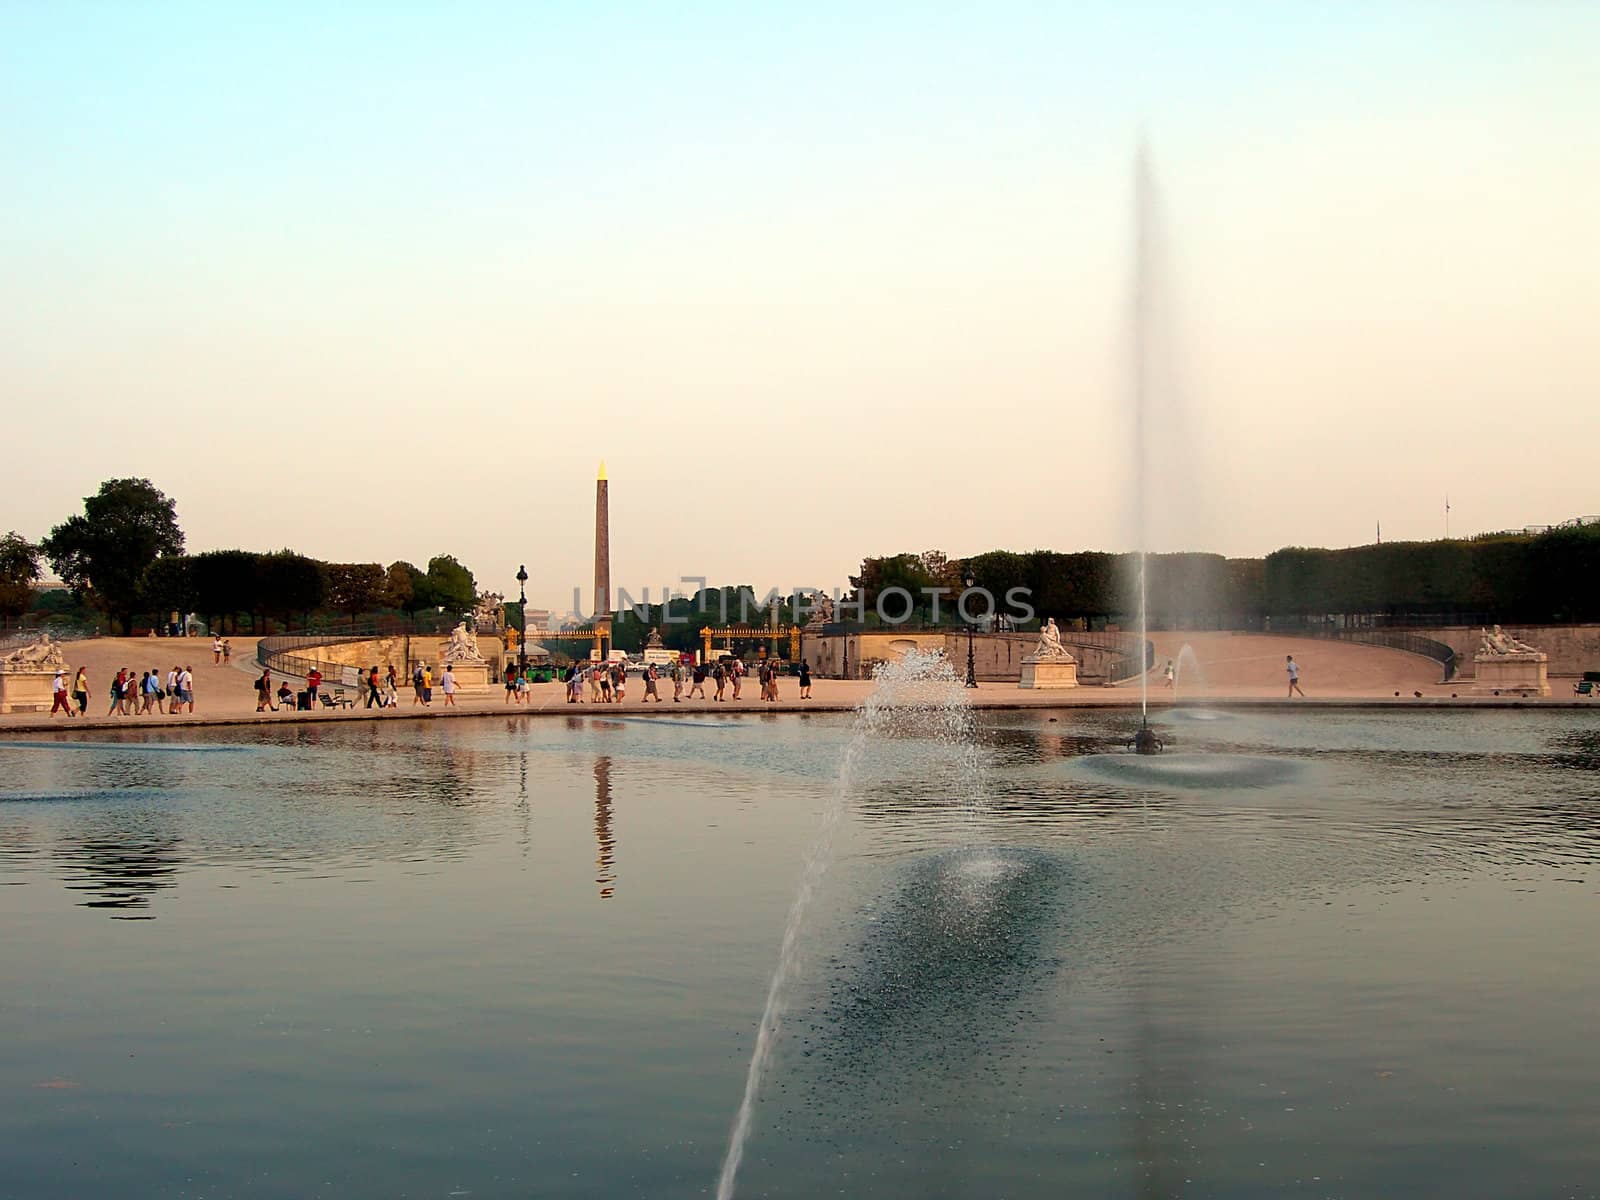 Fountains near Concorde square in Paris by drakodav